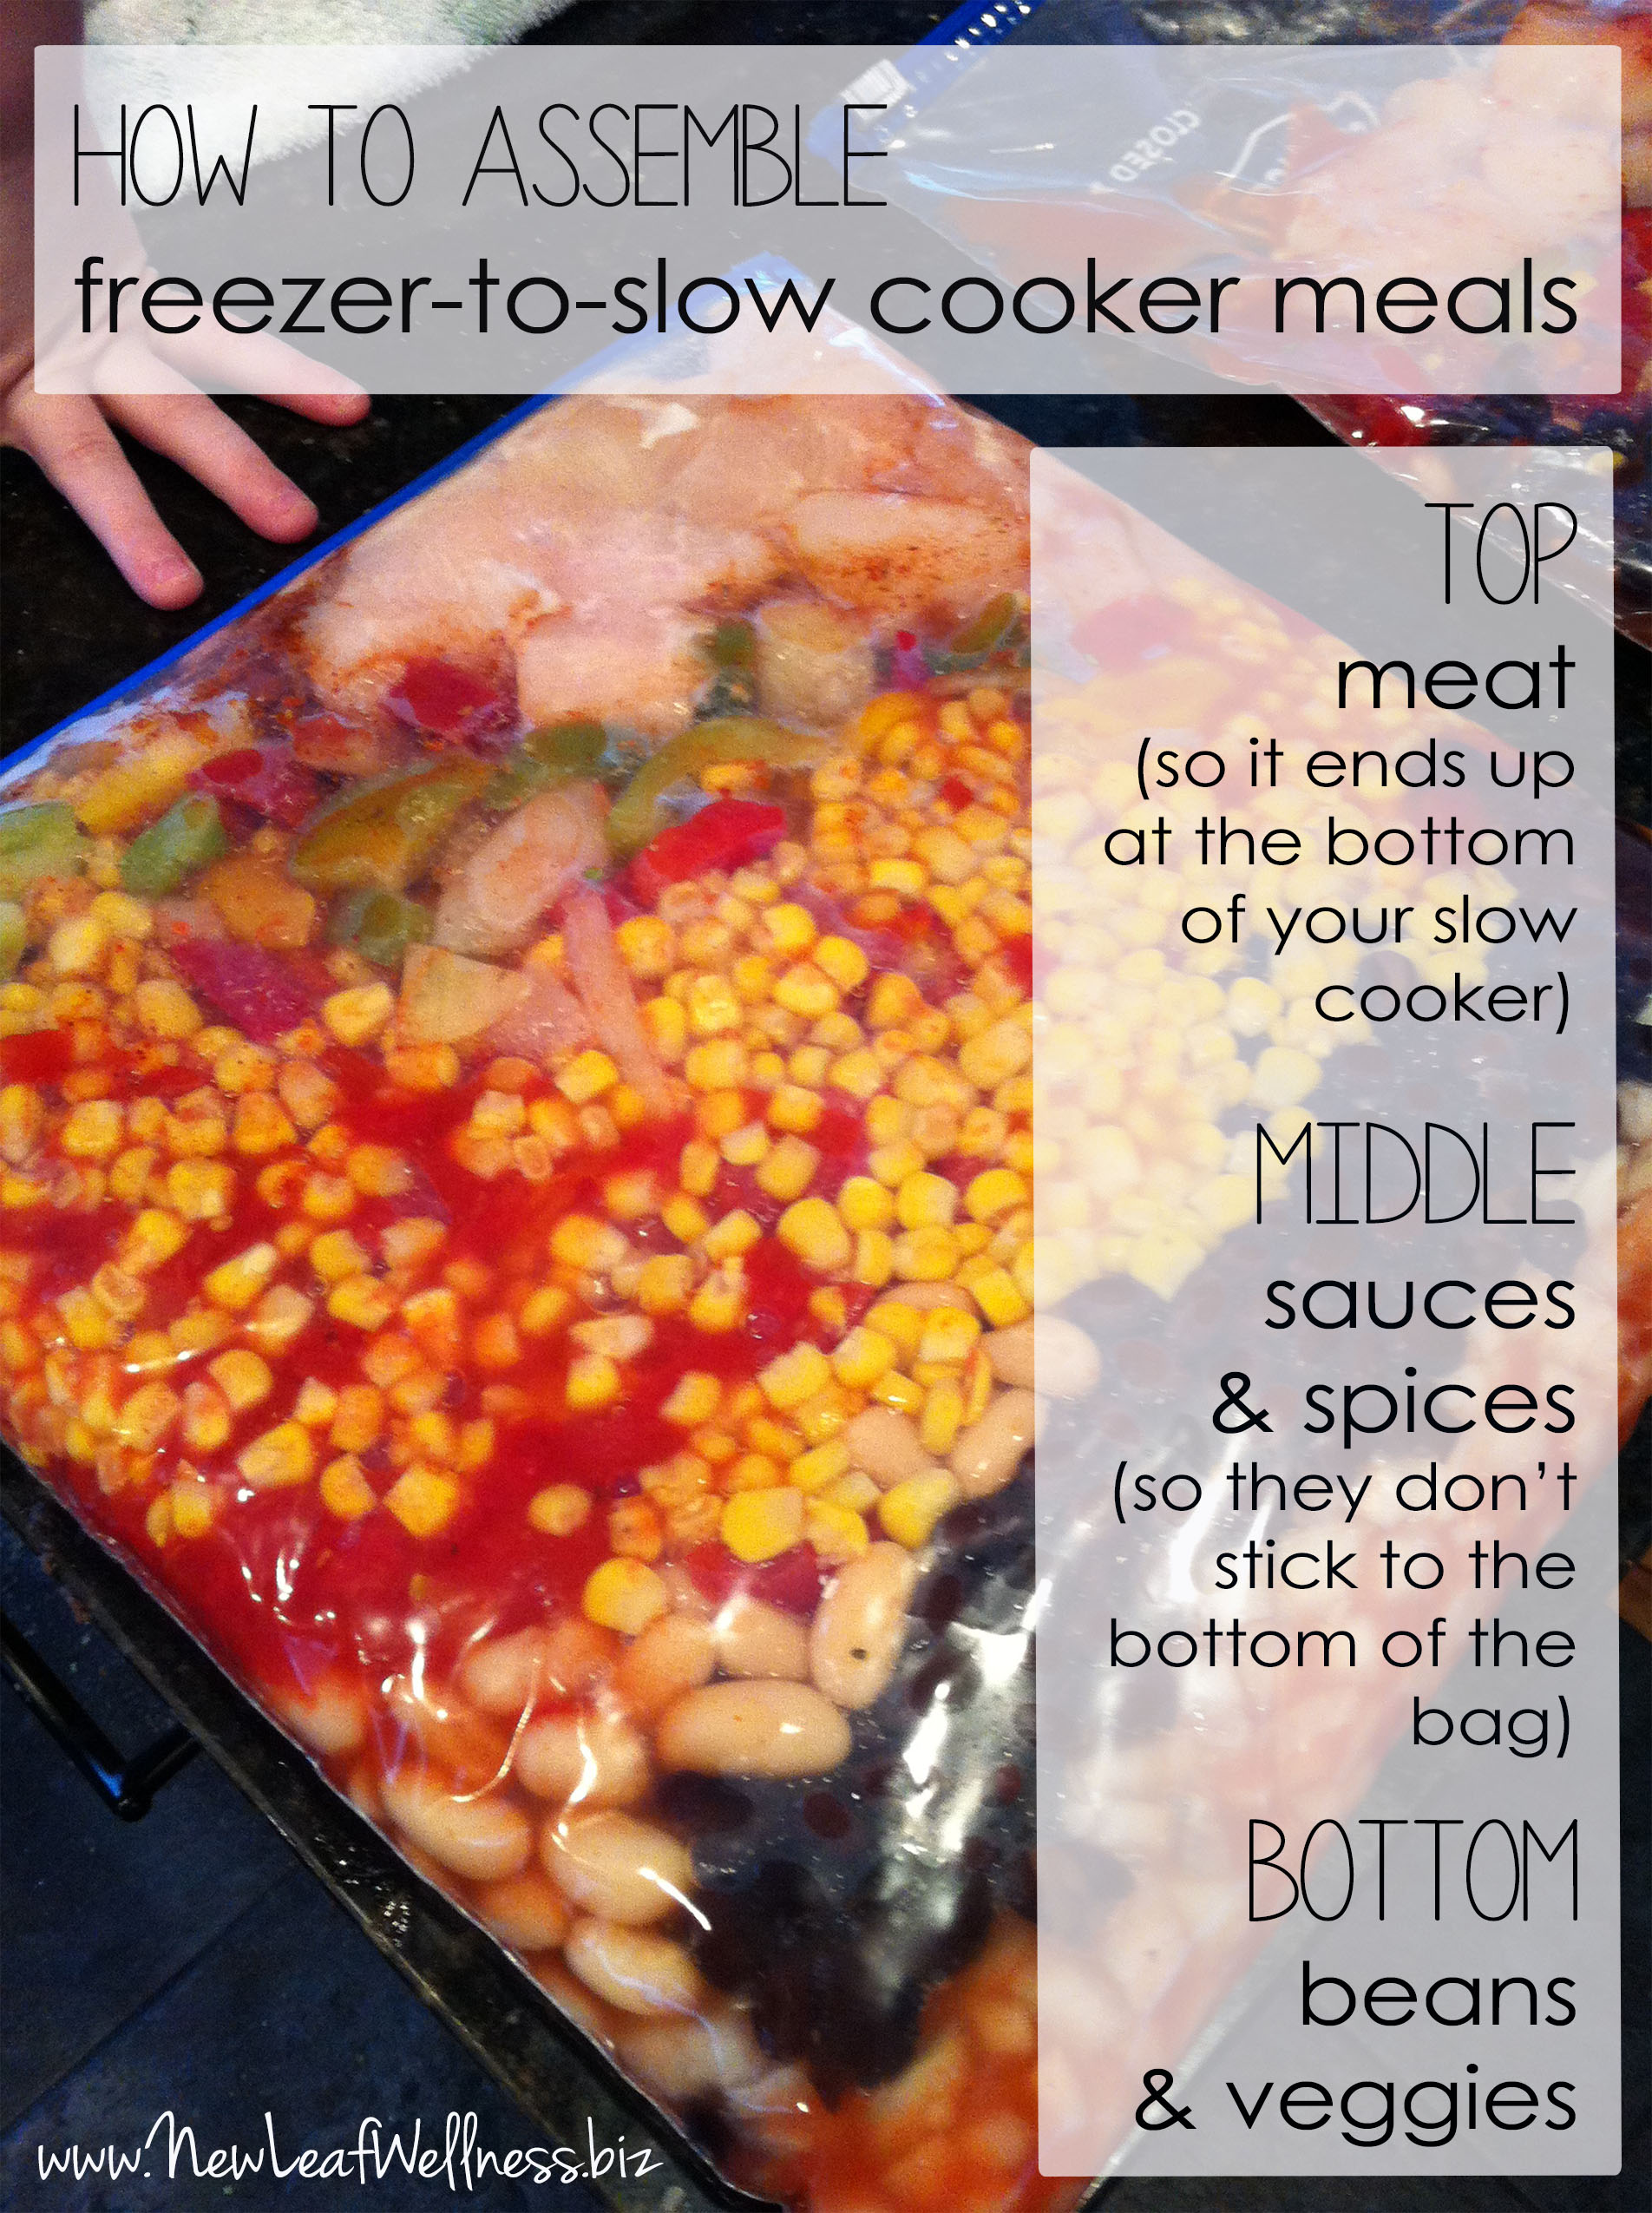 Freezer Oven Bags Meals - Slow Cooker Tip